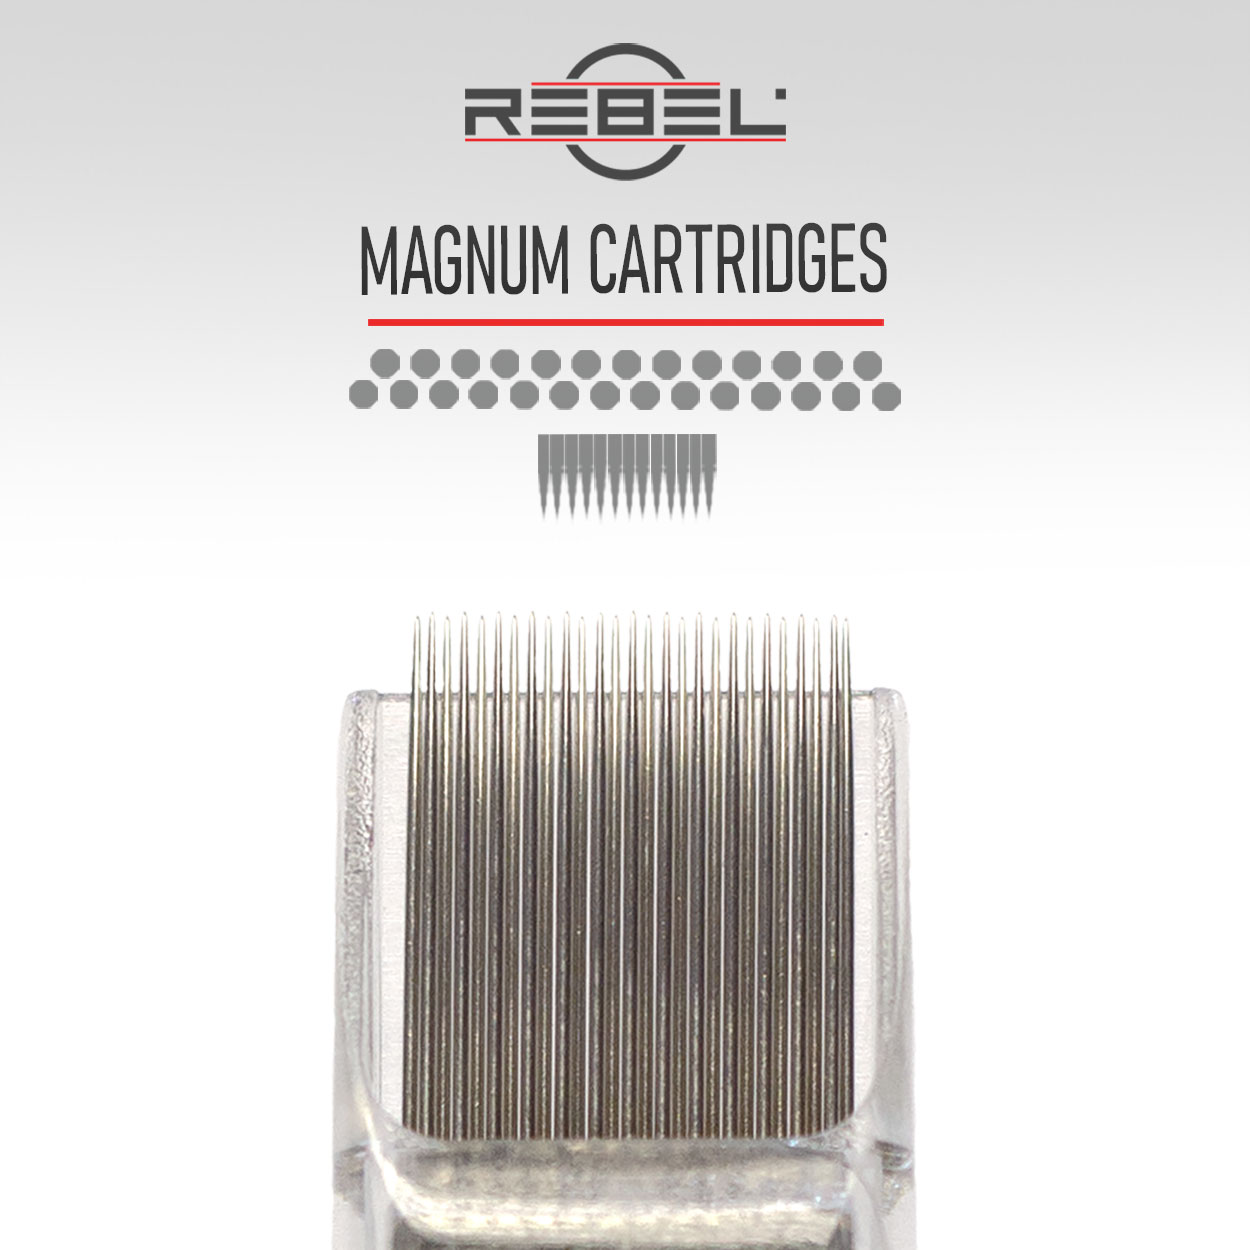 Magnum needles - Precision tattoo cartridge configurations - Tattoo Equipment - REBEL